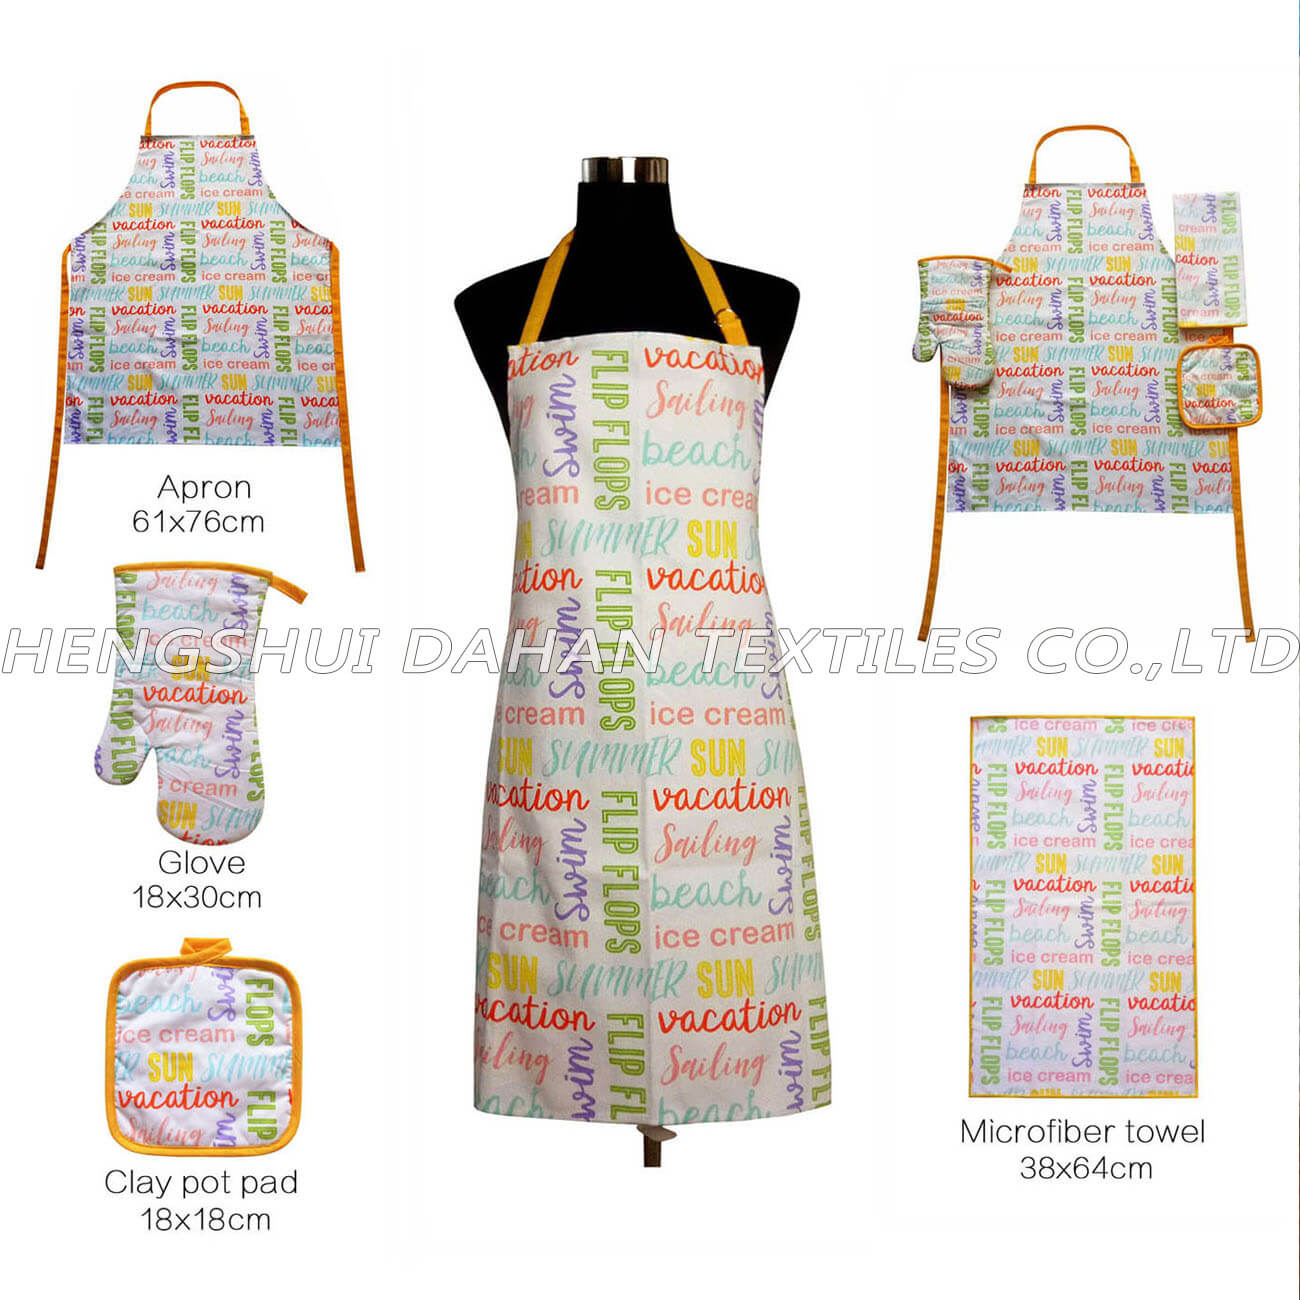 AGP40 Printing apron,oven mitt,potholder,microfiber towel 4 packs 